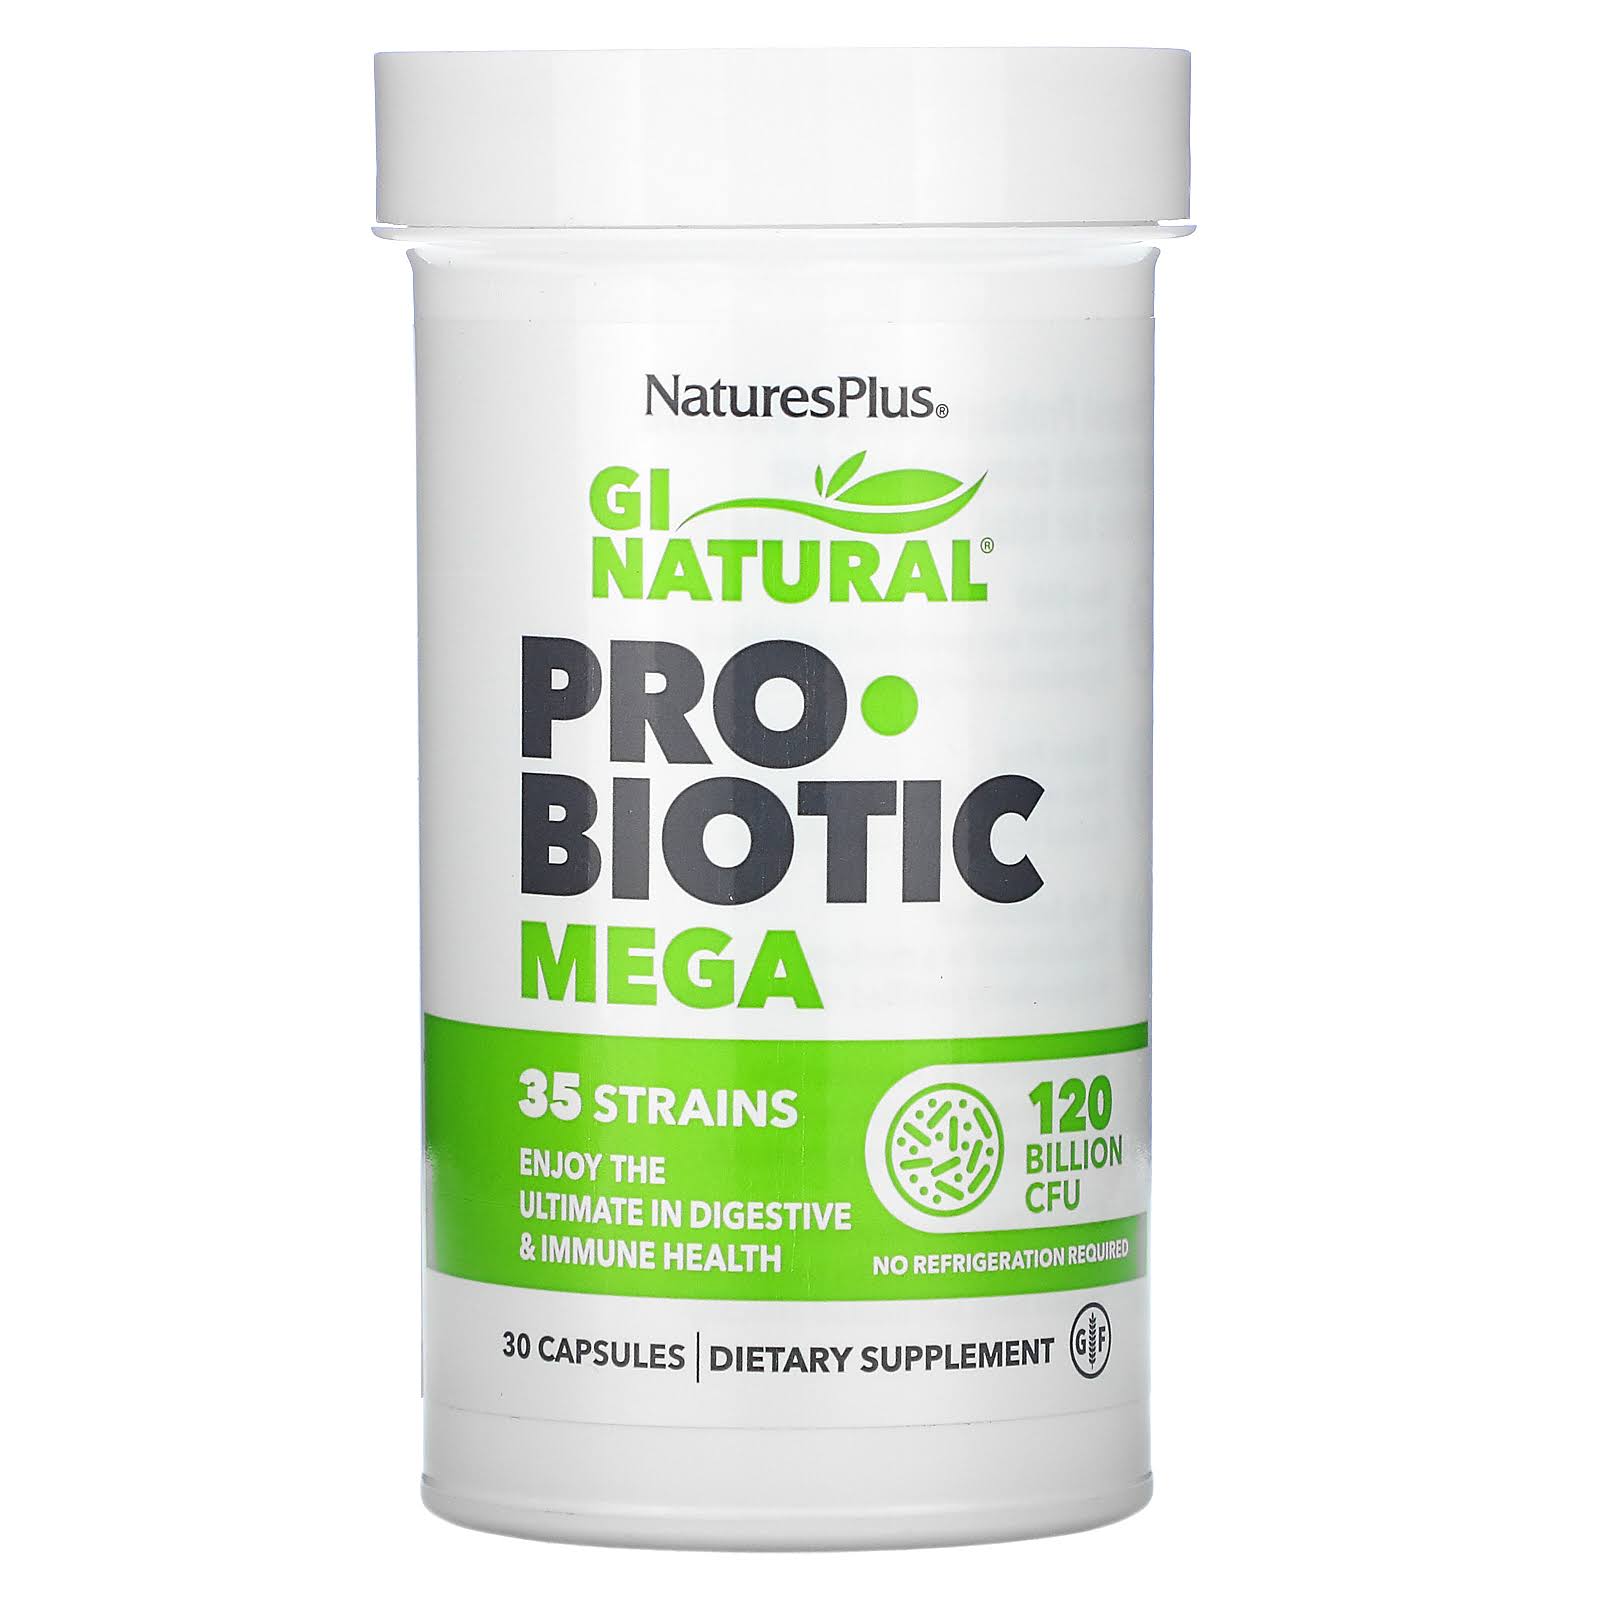 Nature's Plus Gi Natural Probiotic Mega 120 Billion CFU - 30 Capsules